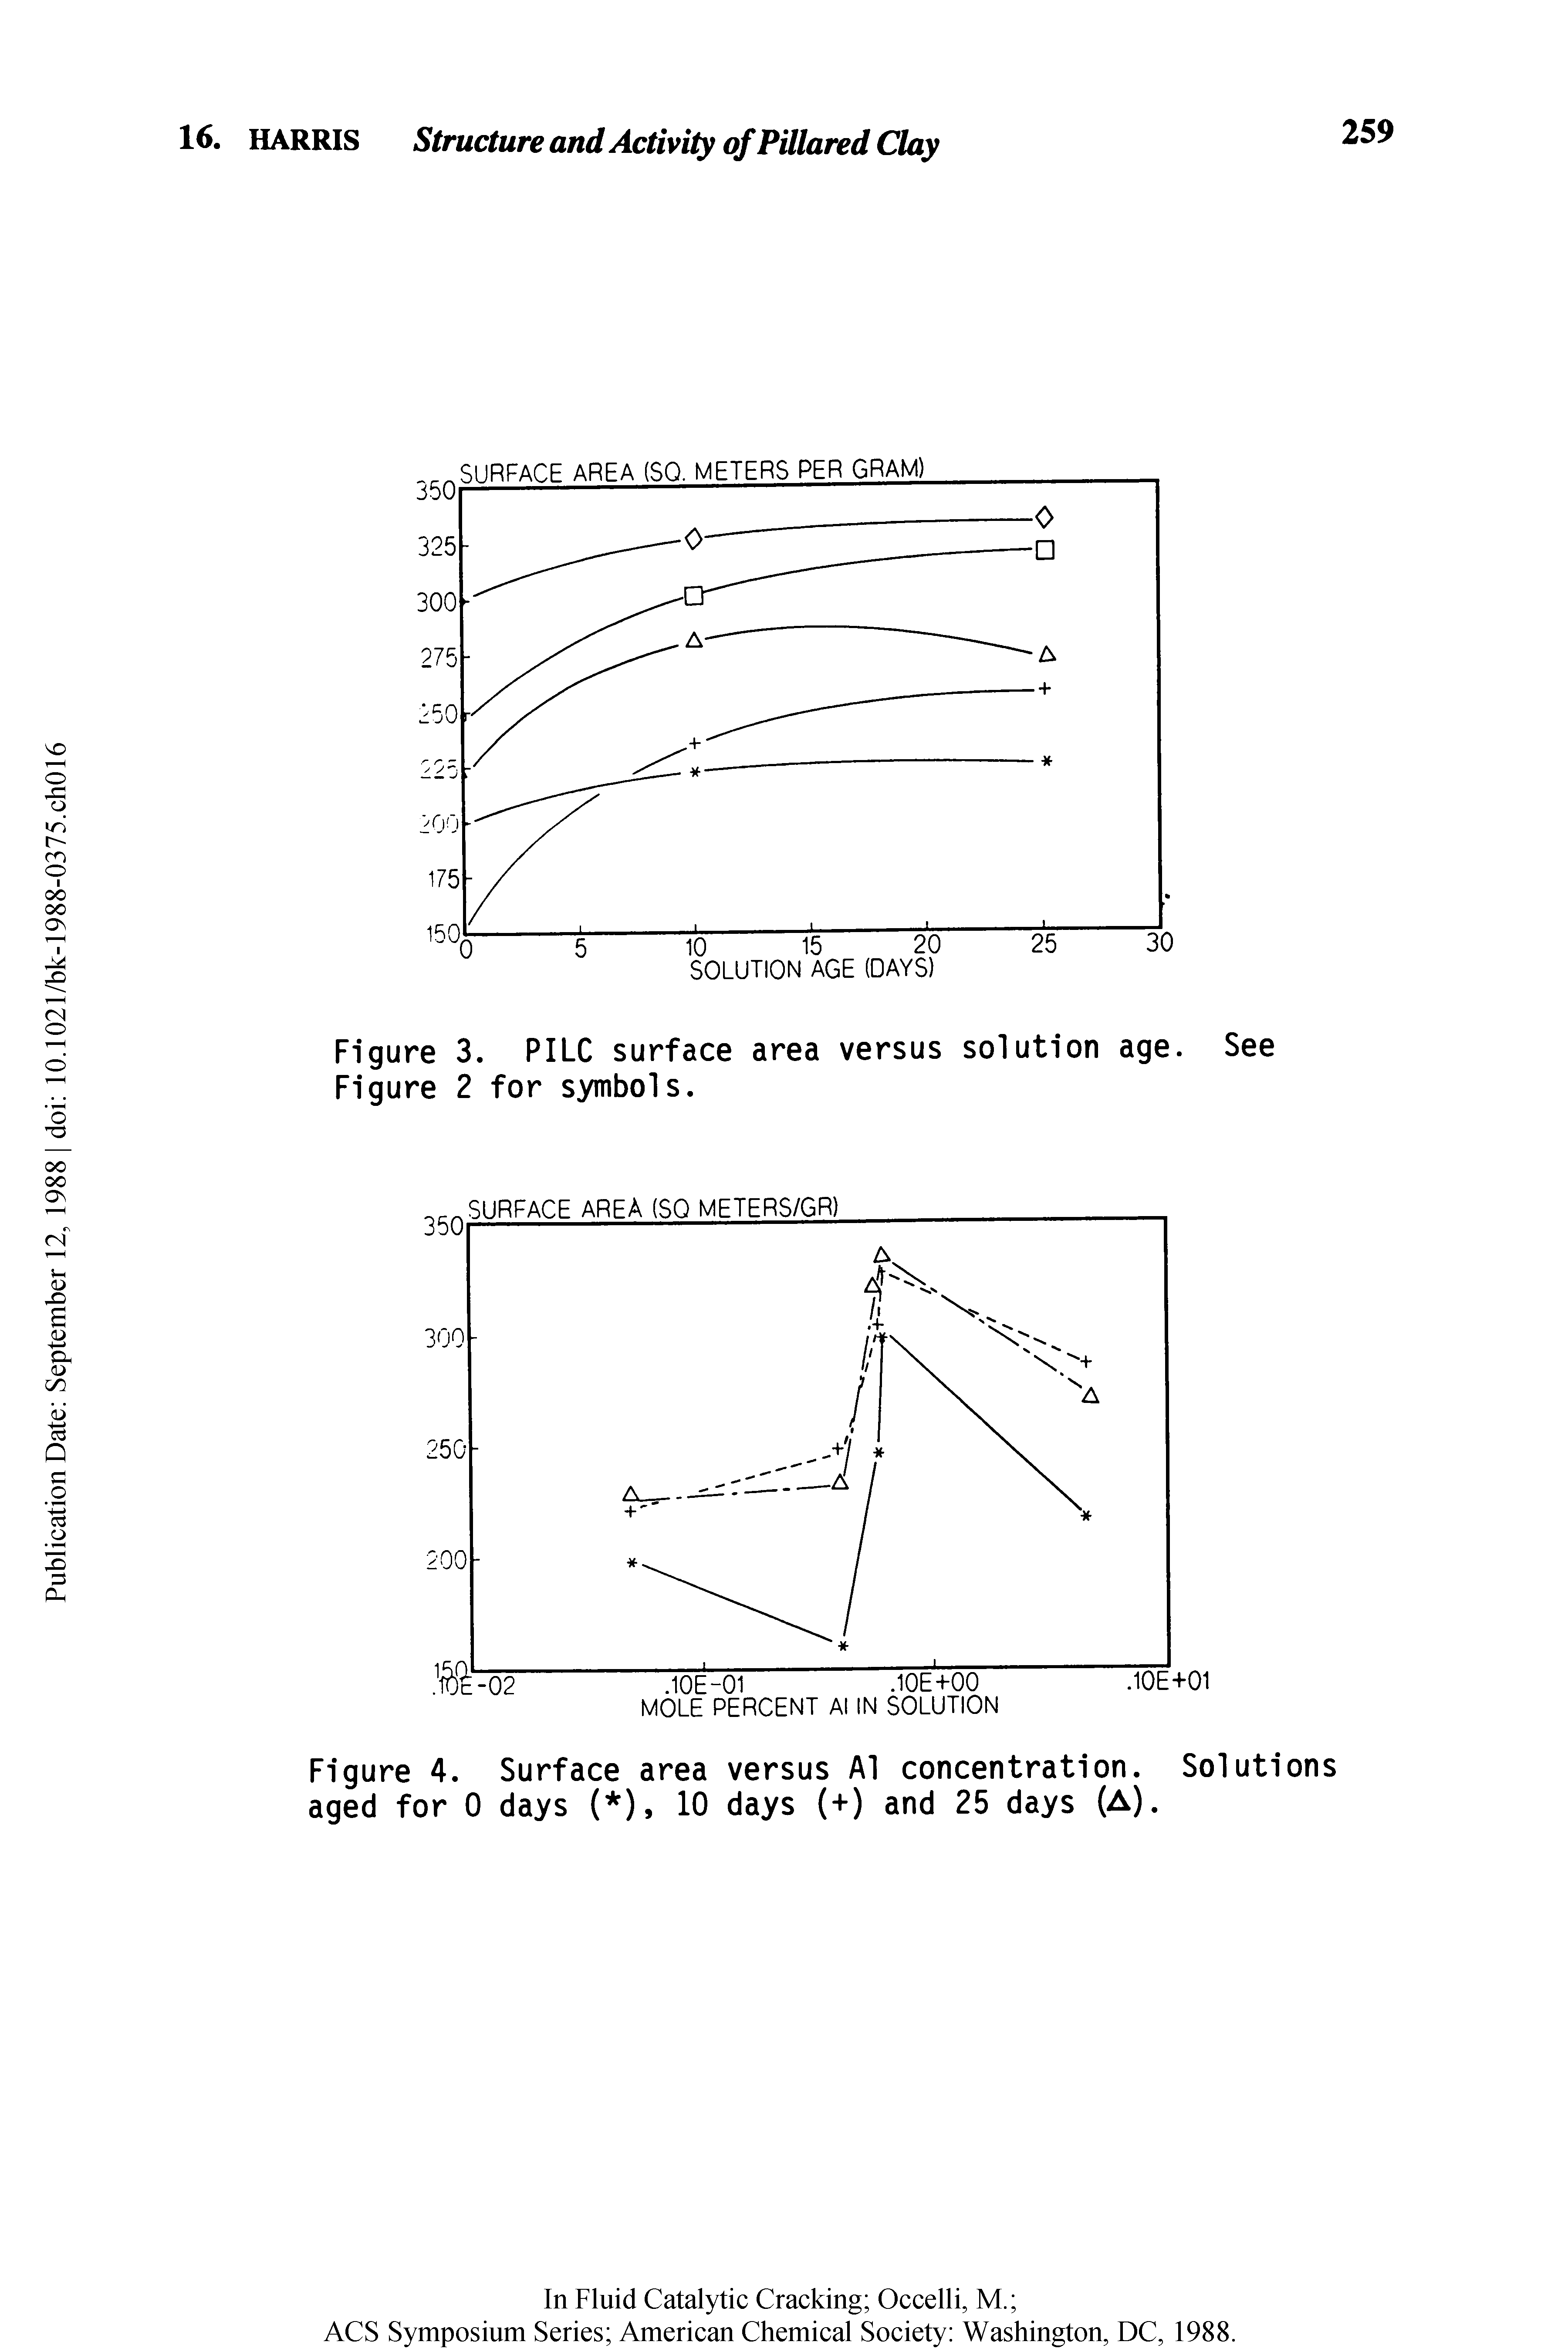 Figure 3. PILC surface area versus solution age. See Figure 2 for symbols.